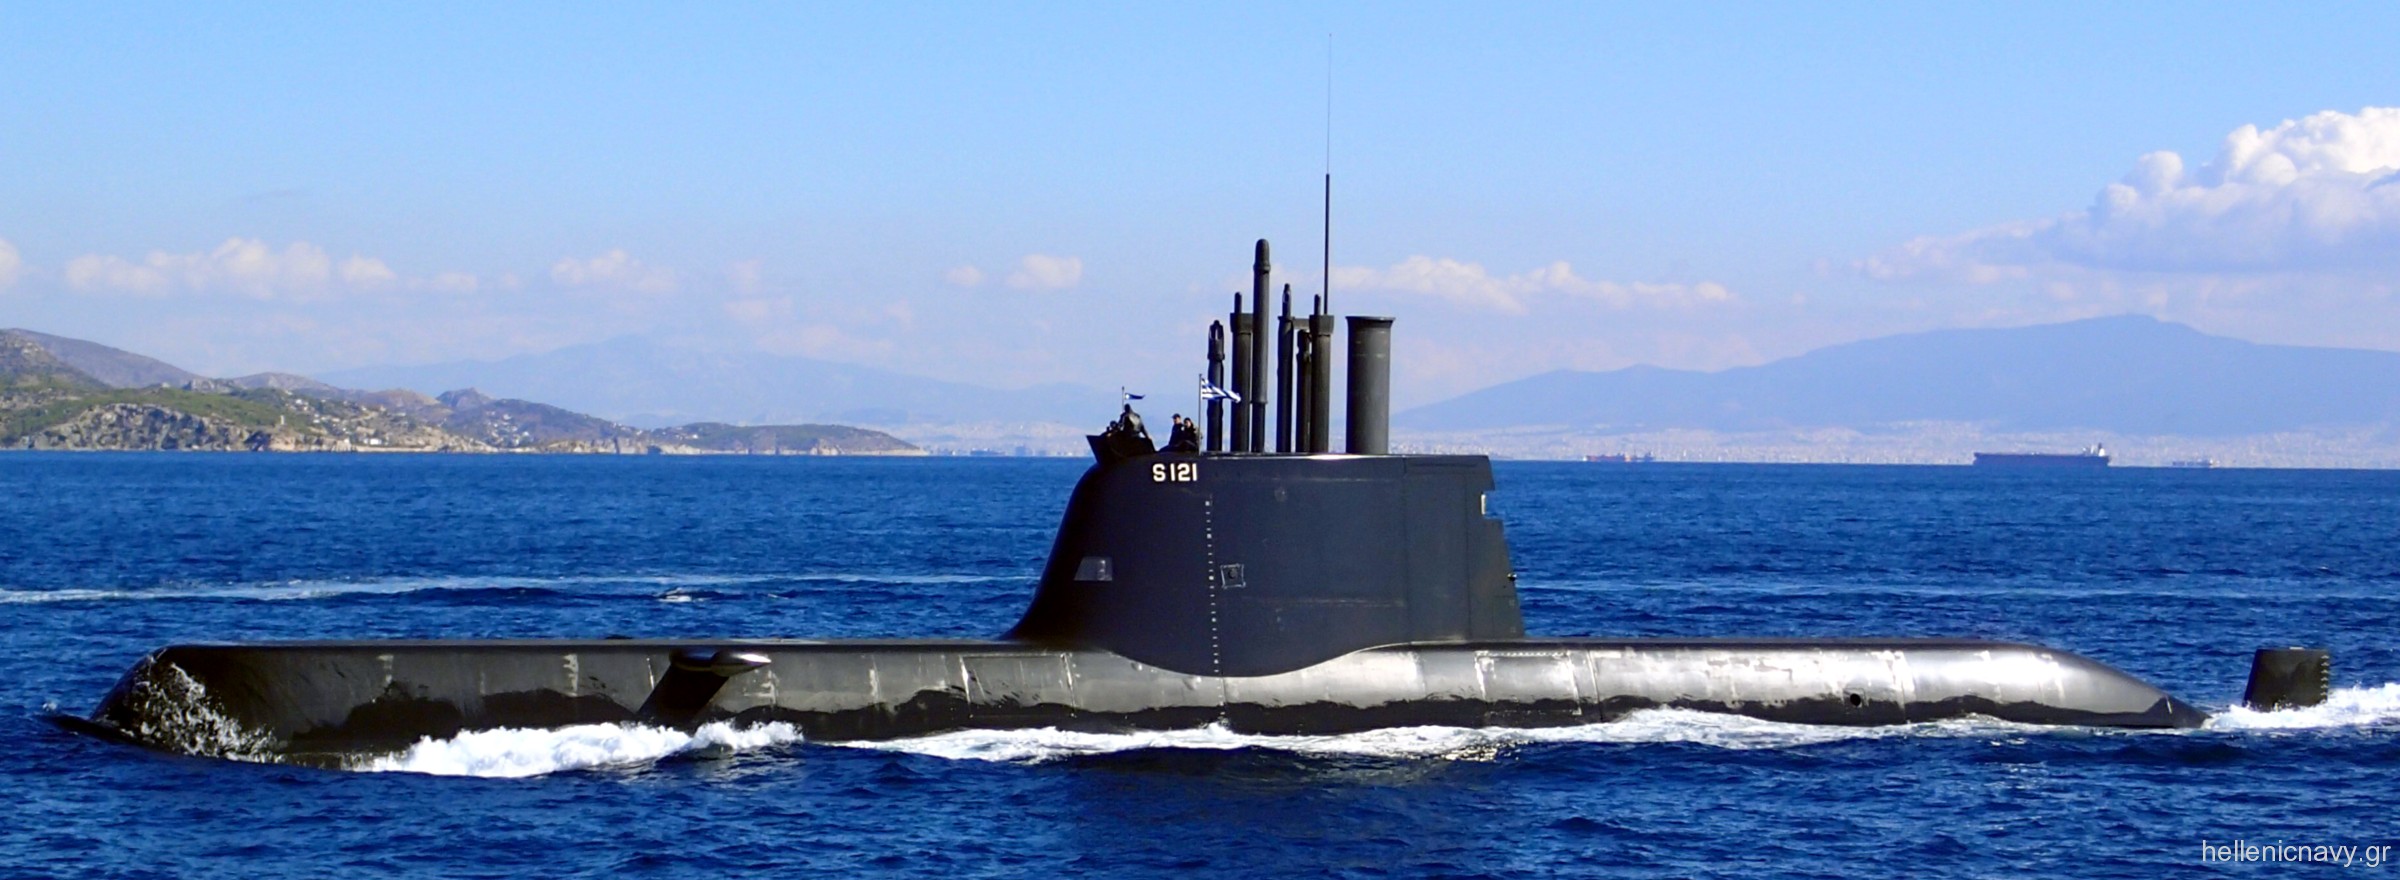 Type 214: Στα «έγκατα» του πιο σύγχρονου υποβρυχίου στη Μεσόγειο